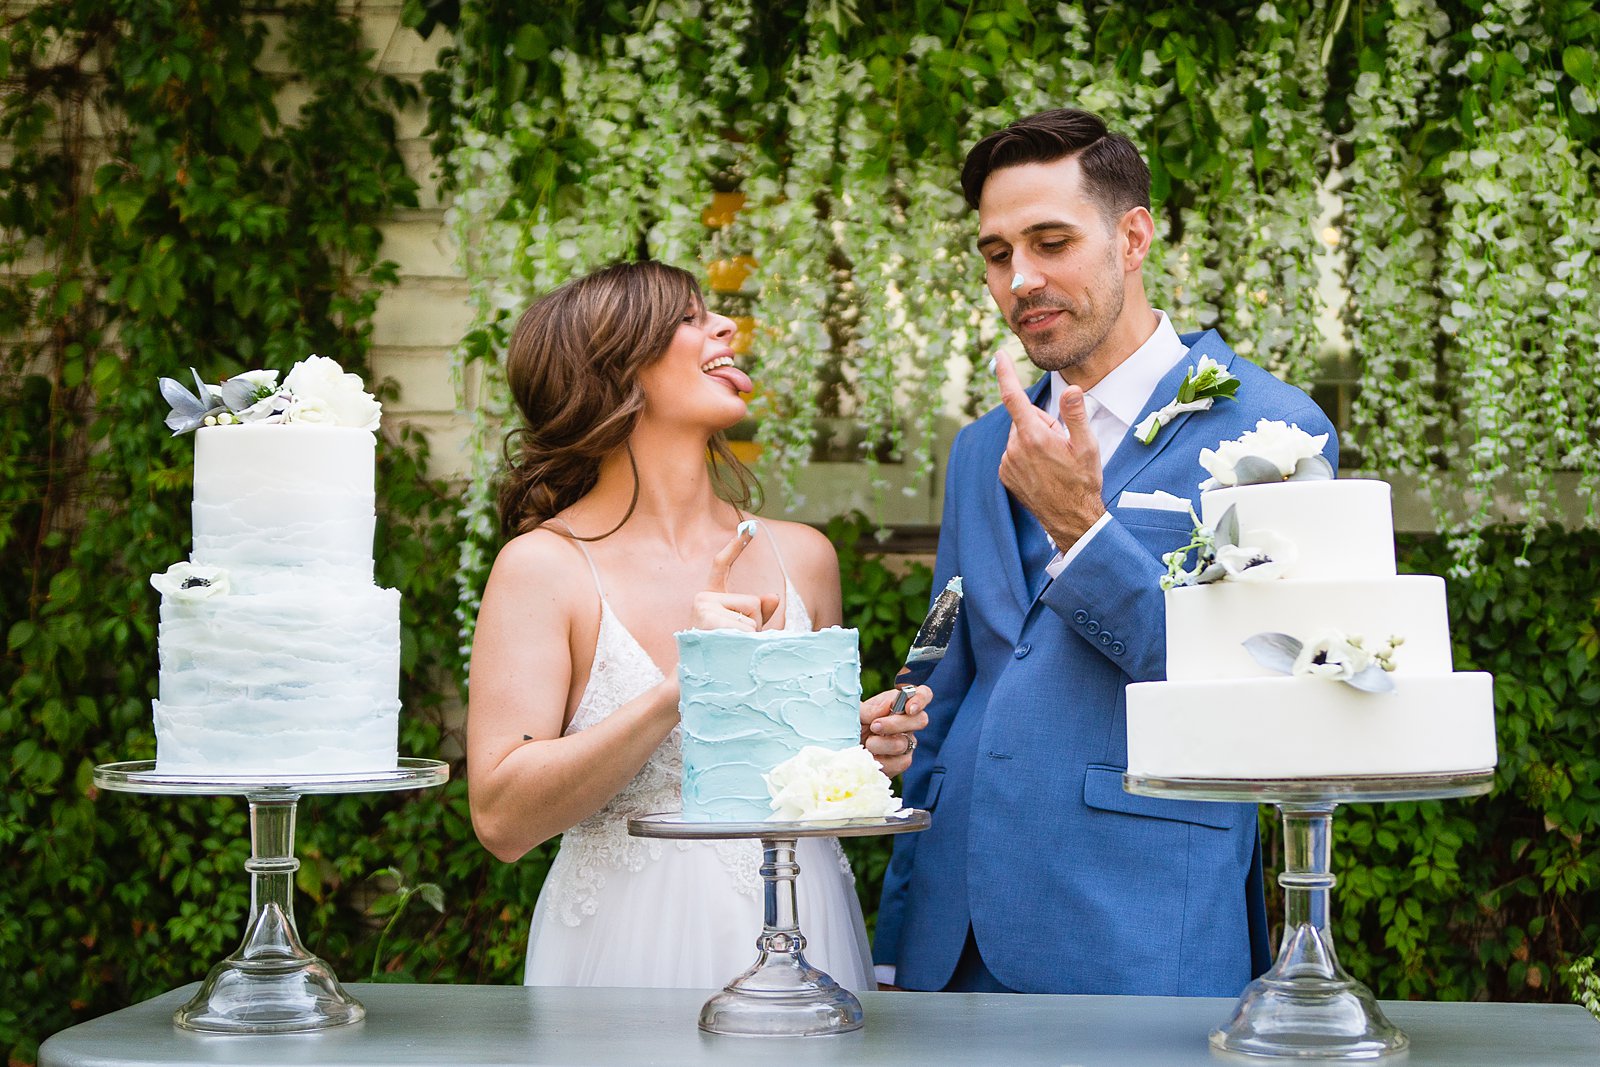 Bride and groom cutting their wedding cake at their Gather Estate wedding reception by Arizona wedding photographer PMA Photography.